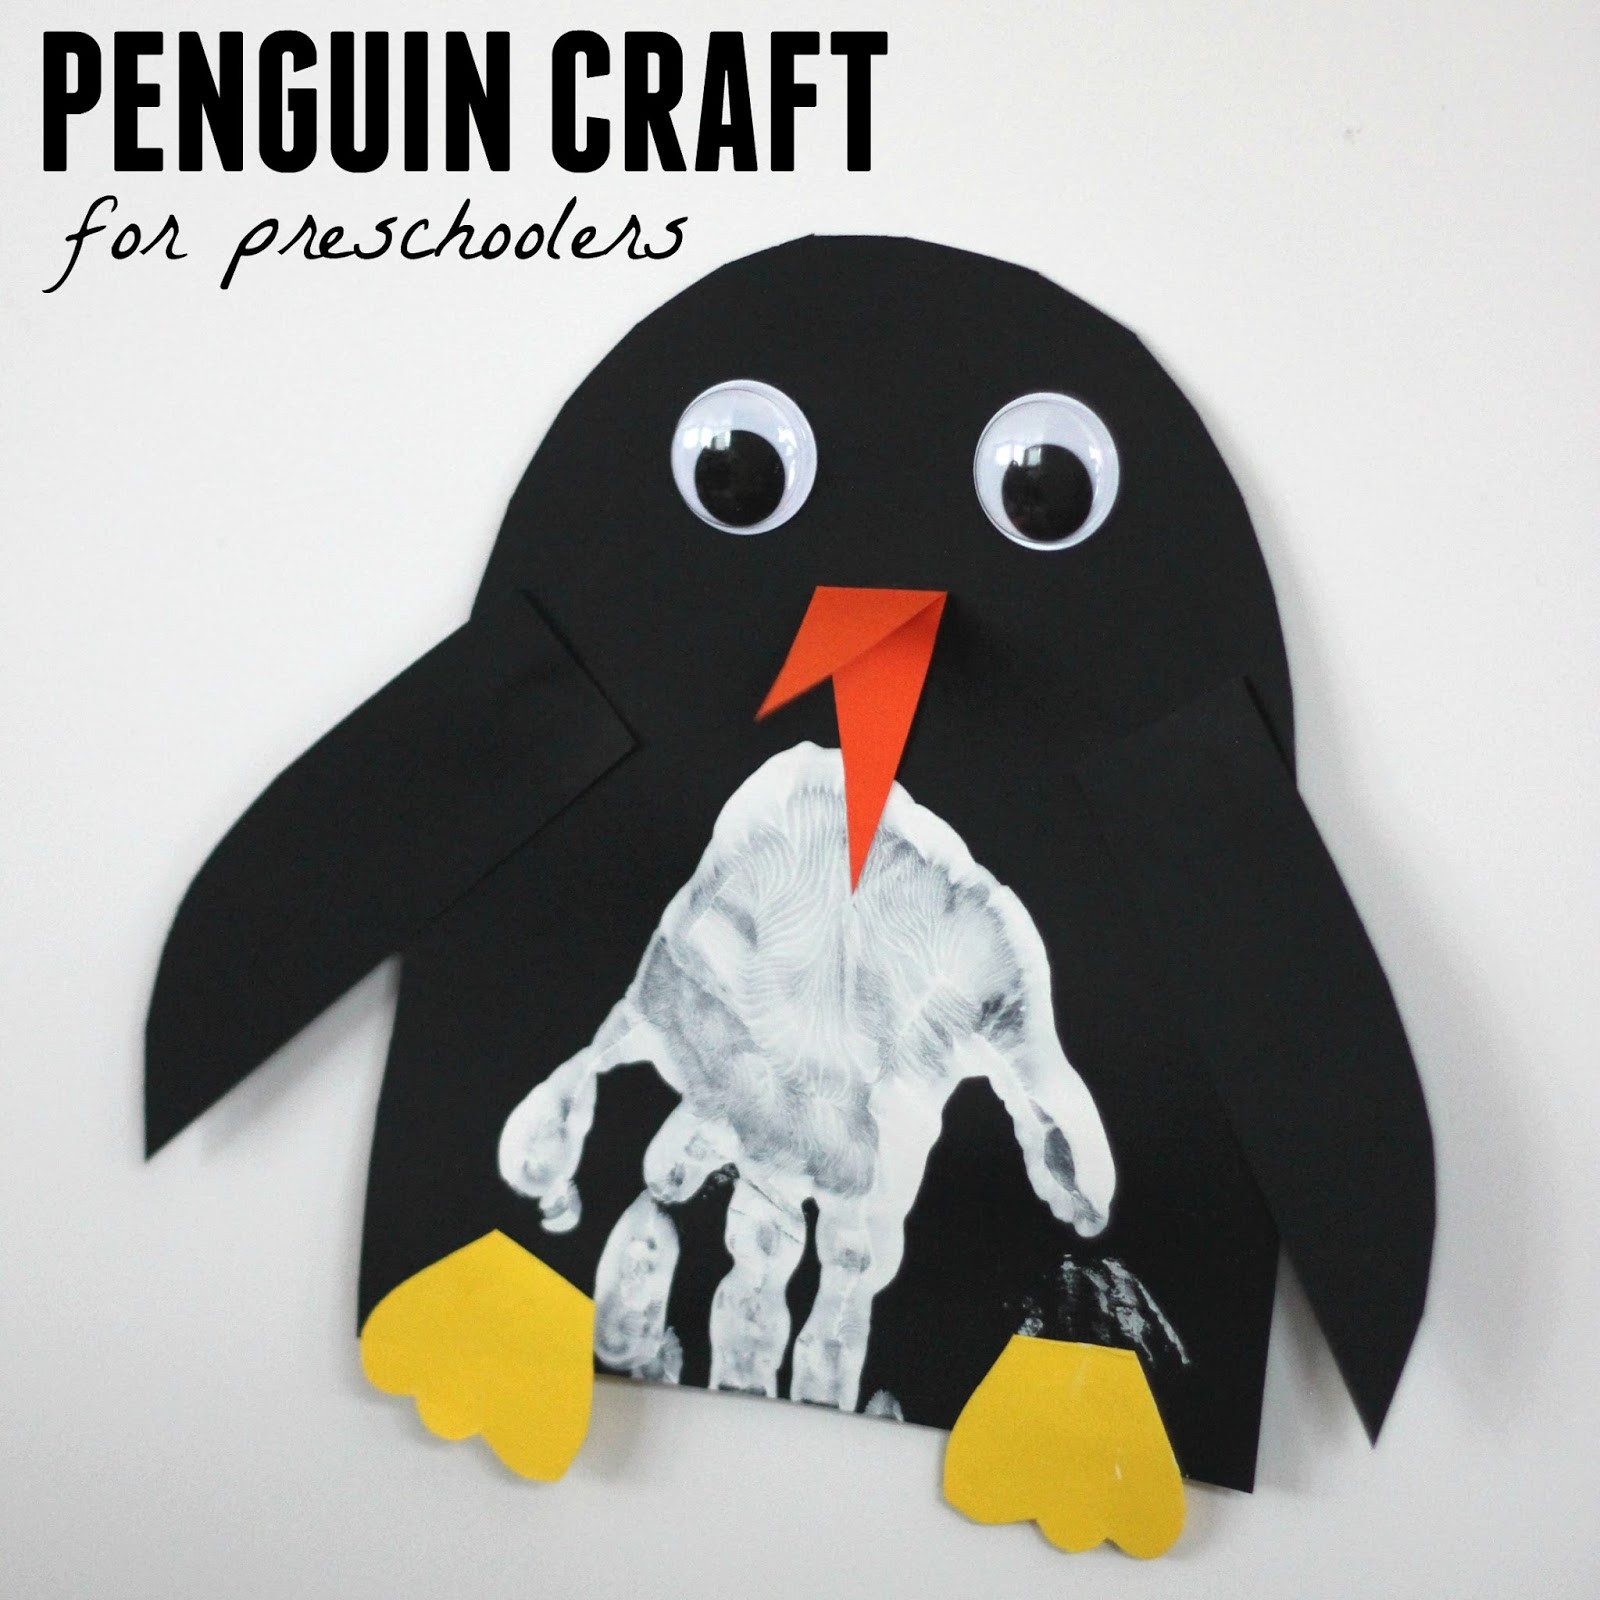 Penguin Craft For Preschoolers
 Toddler Approved Handprint Penguin Craft